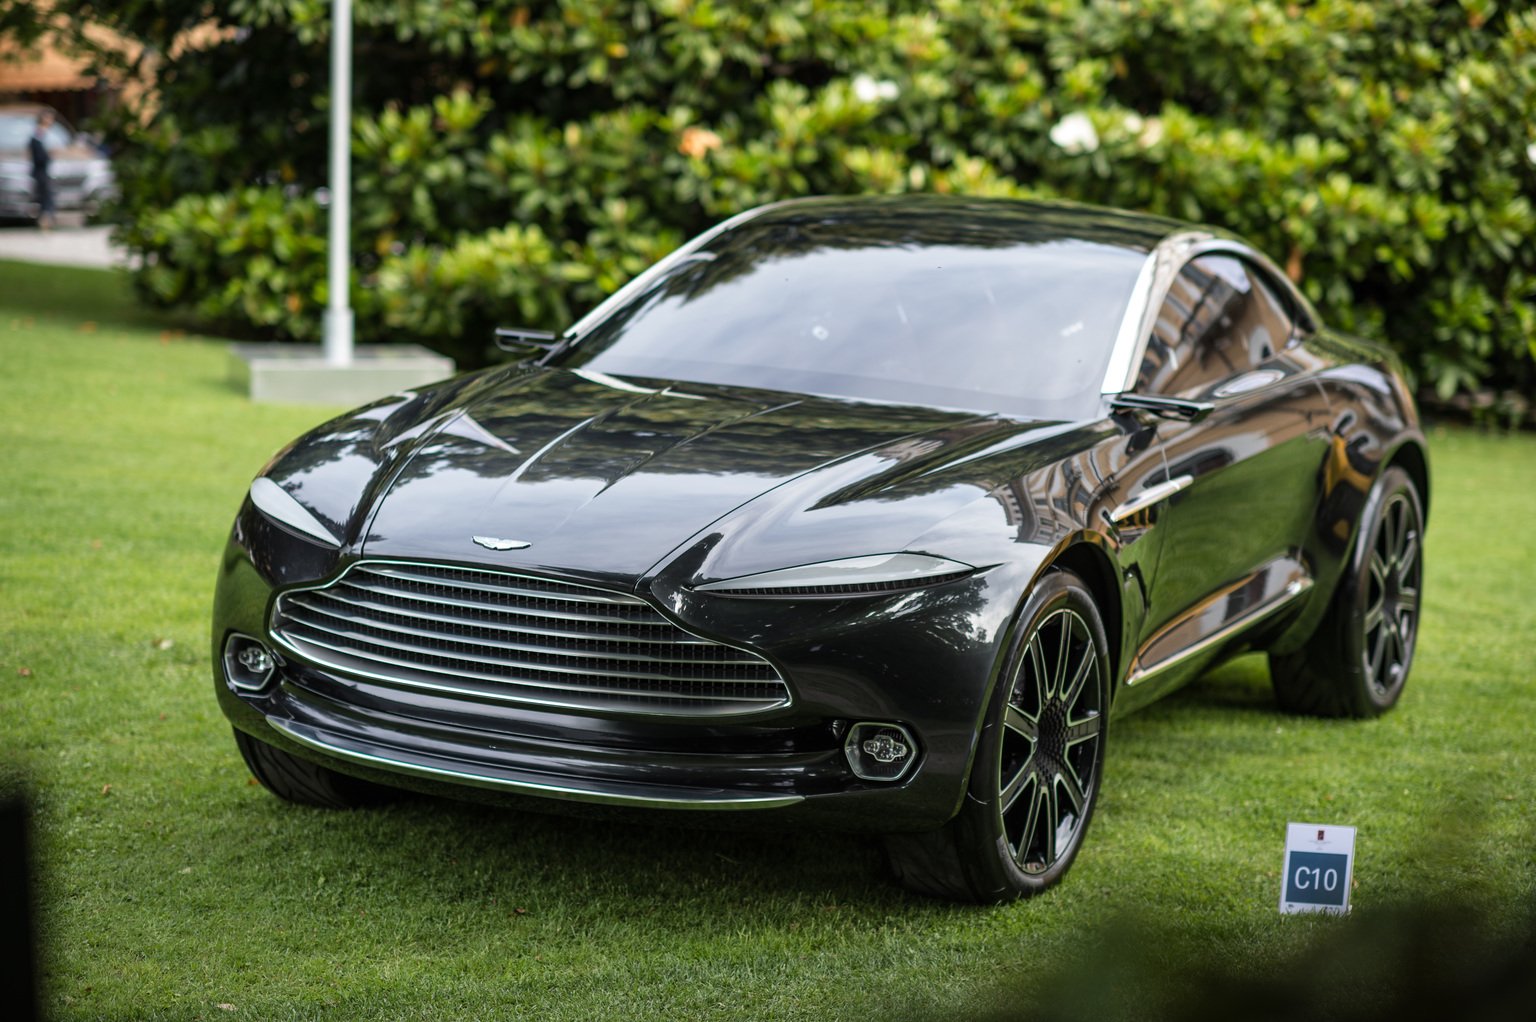 Unparalleled Luxury: The Aston Martin DBX Concept